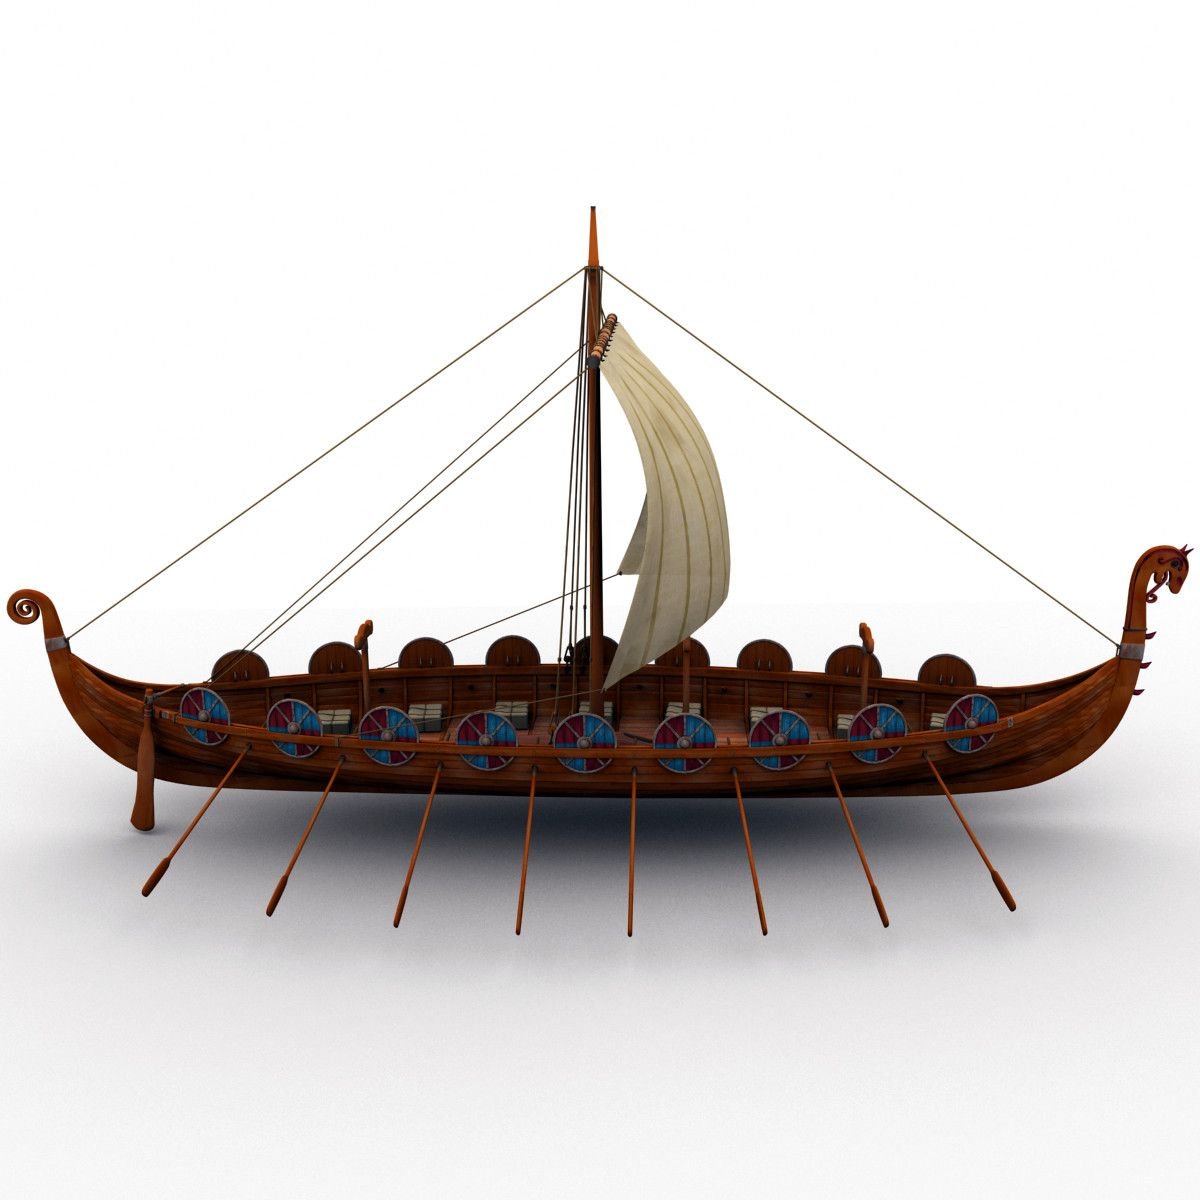 Тема ладья. Ладья Драккар викингов. Лодка викингов дракар. Корабль викингов Драккар 10 век. Модель корабля Viking ship Drakkar 3d модель.